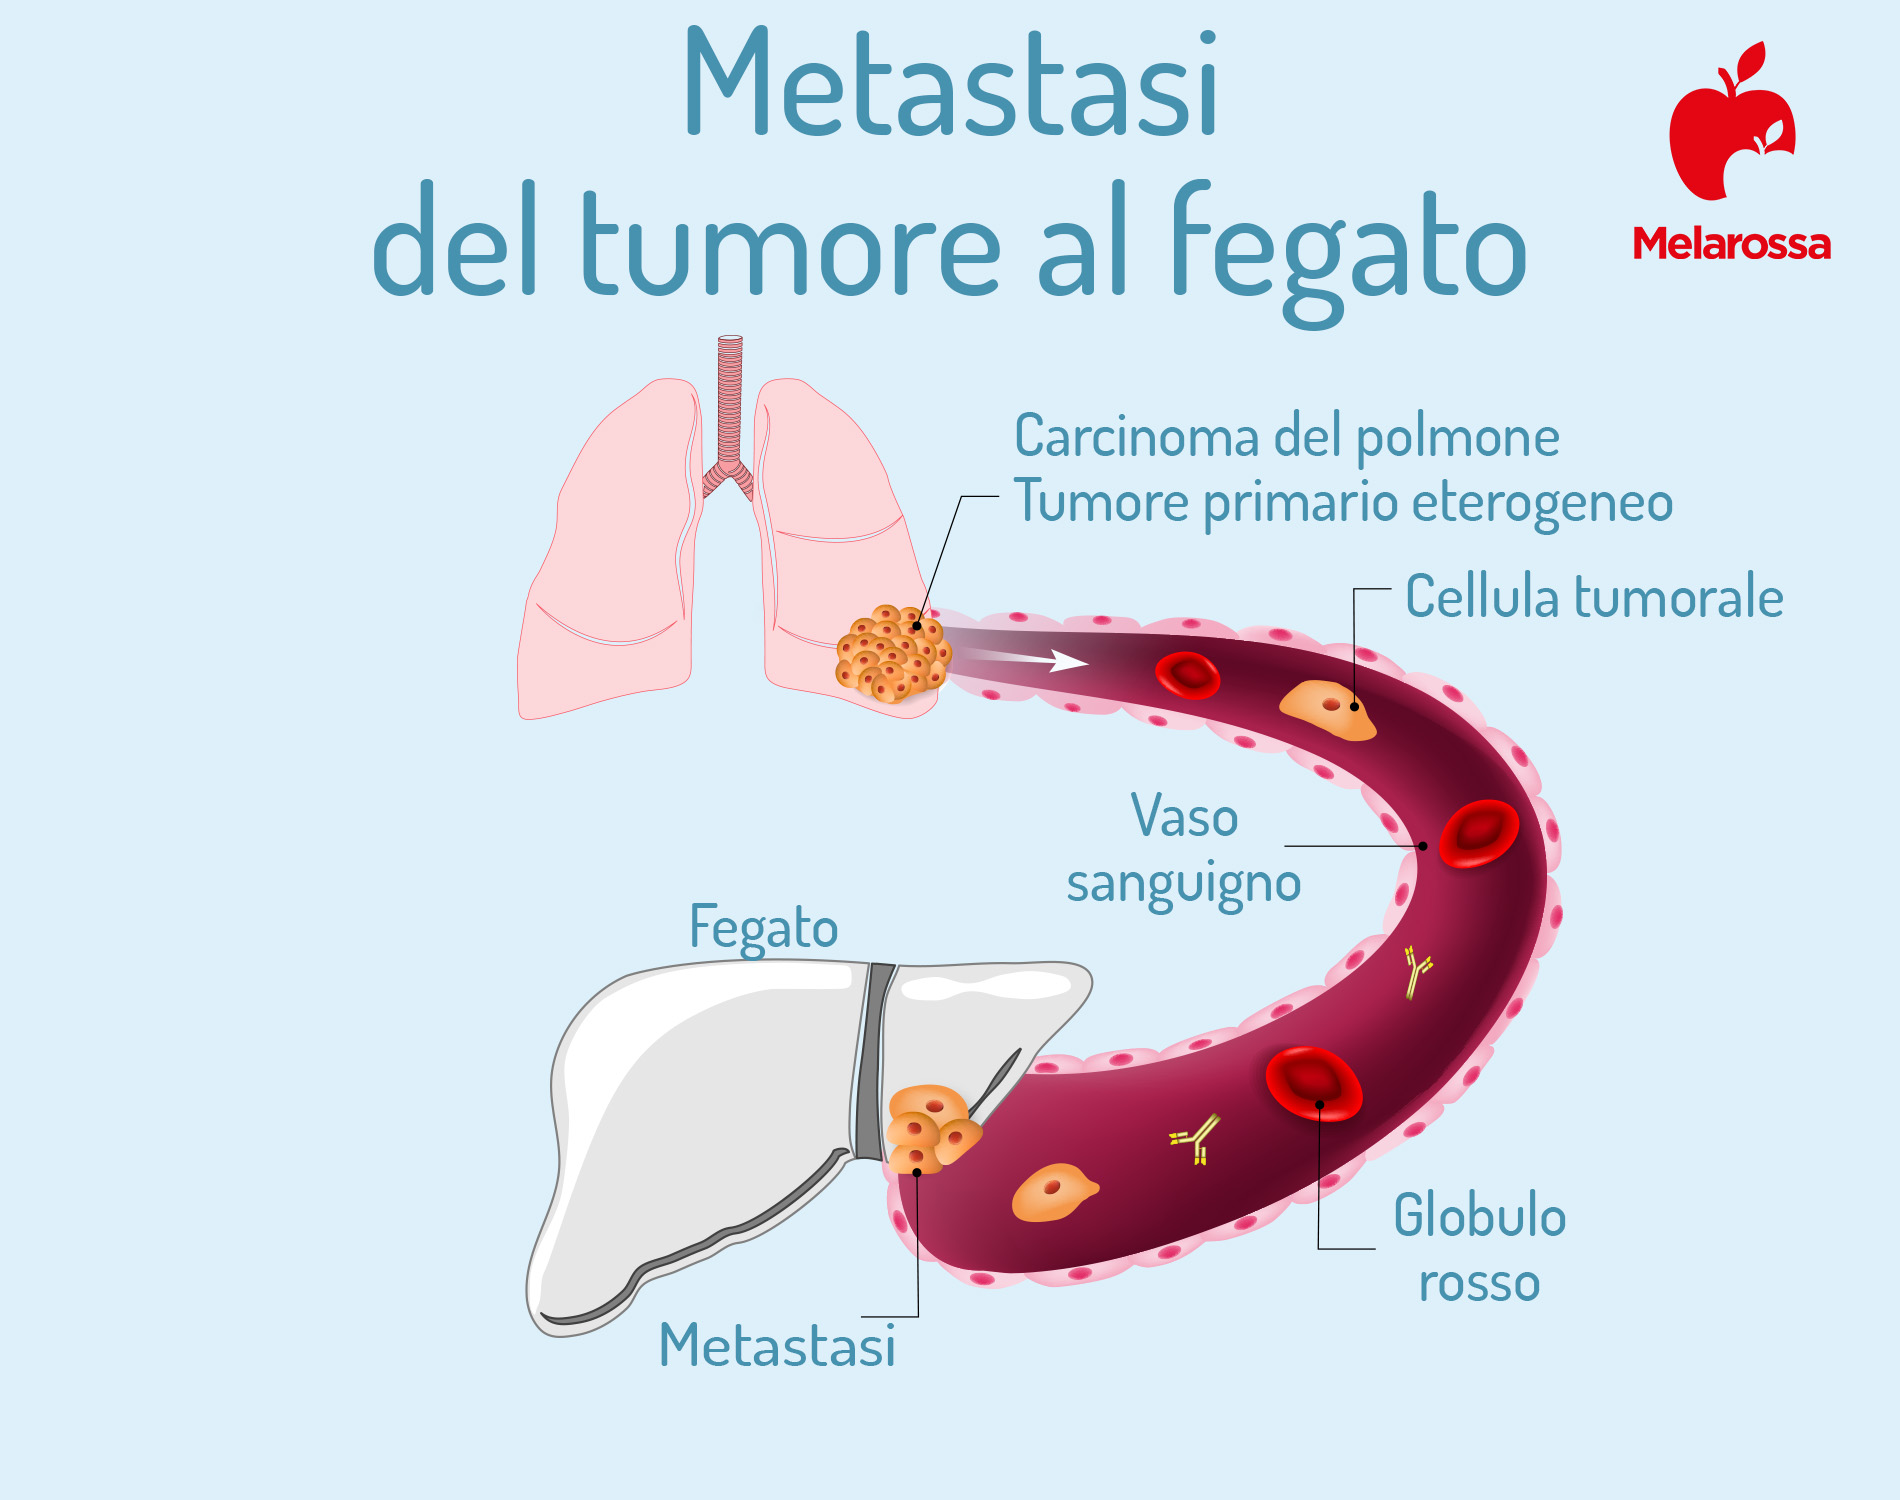 metastasi: tumore al fegato 